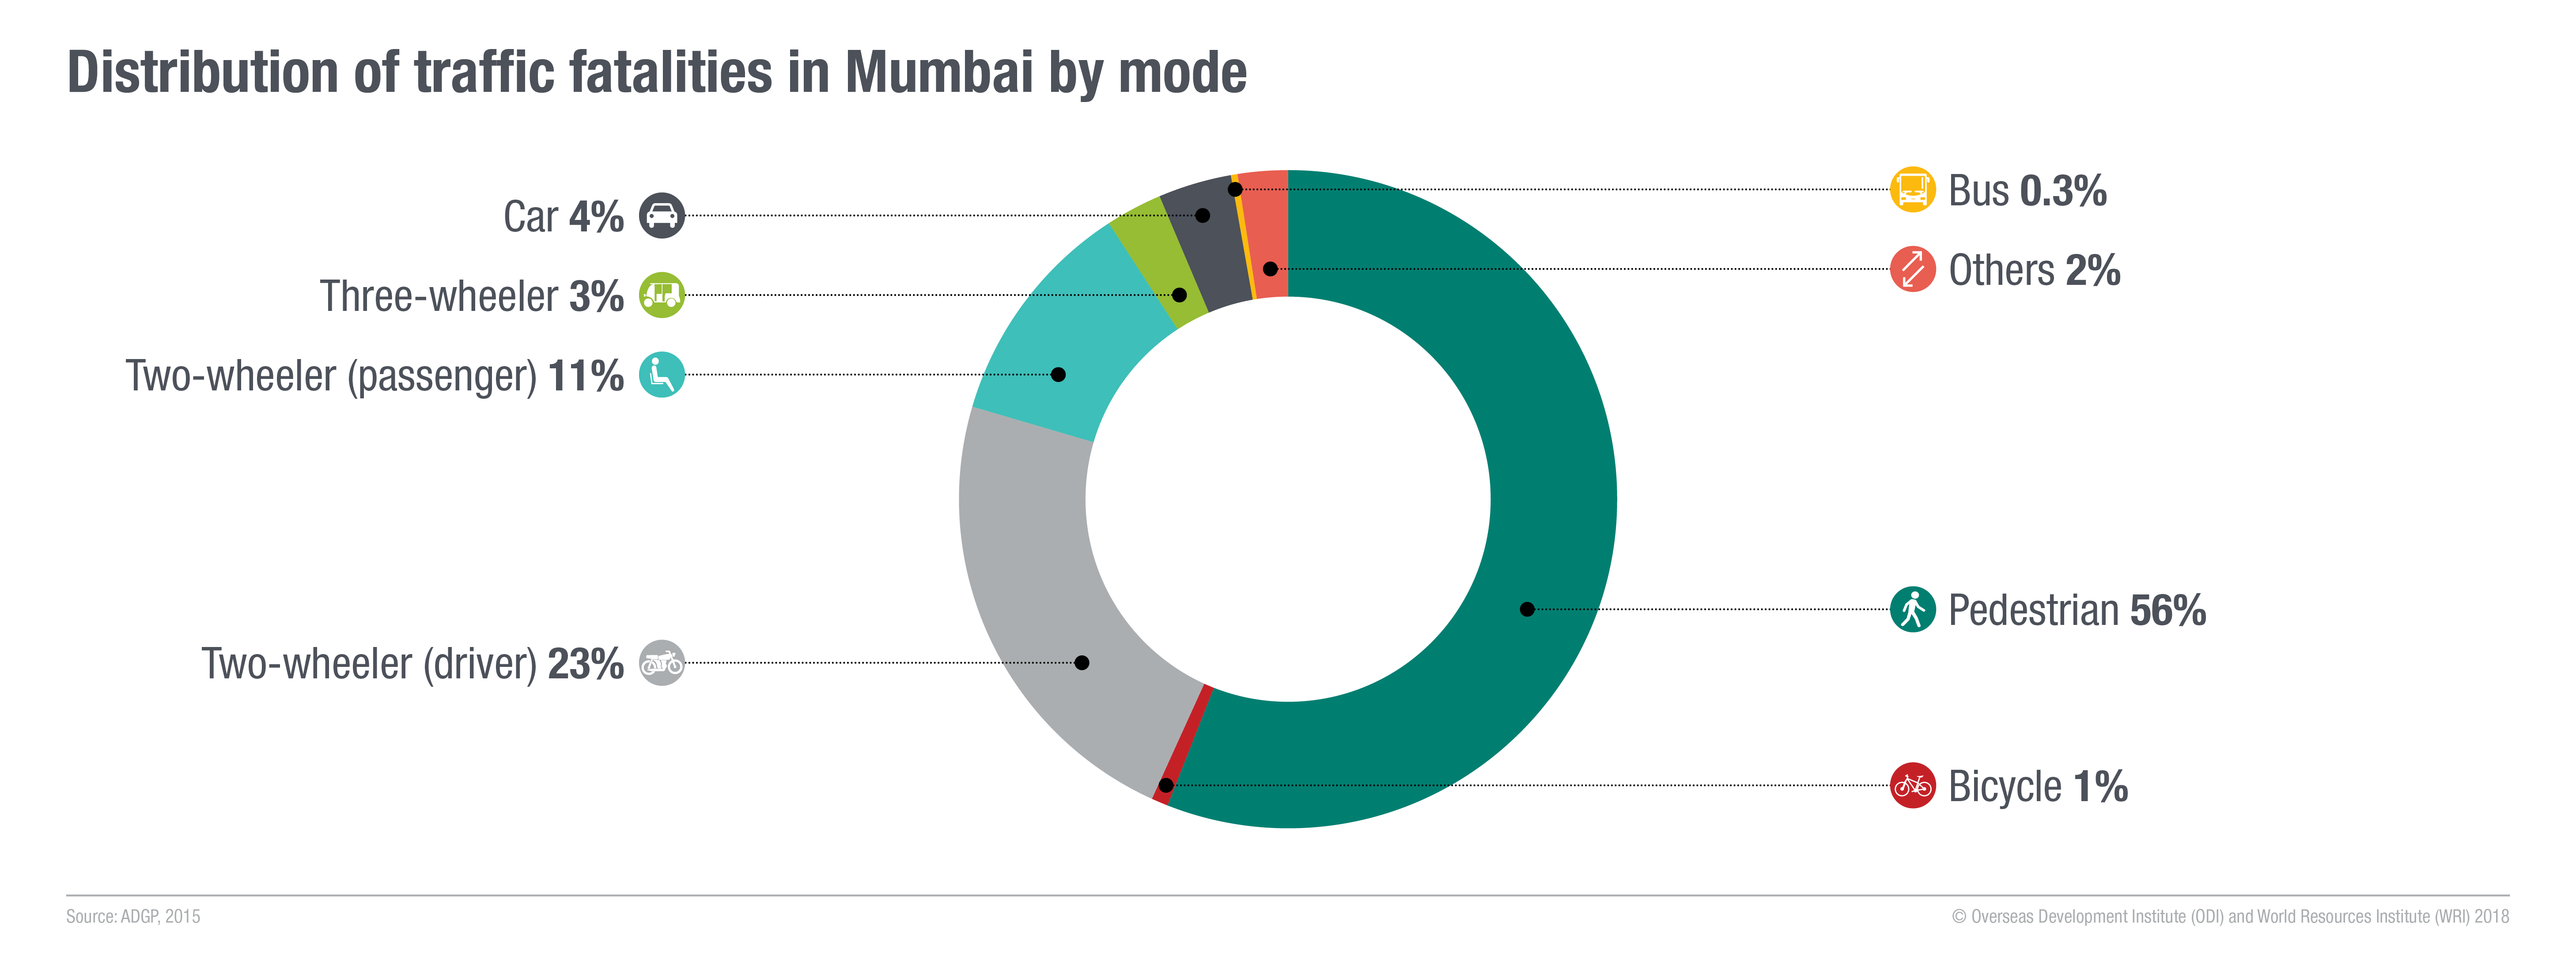 Distribution of traffic fatalities in Mumbai by mode. Image: ODI and WRI